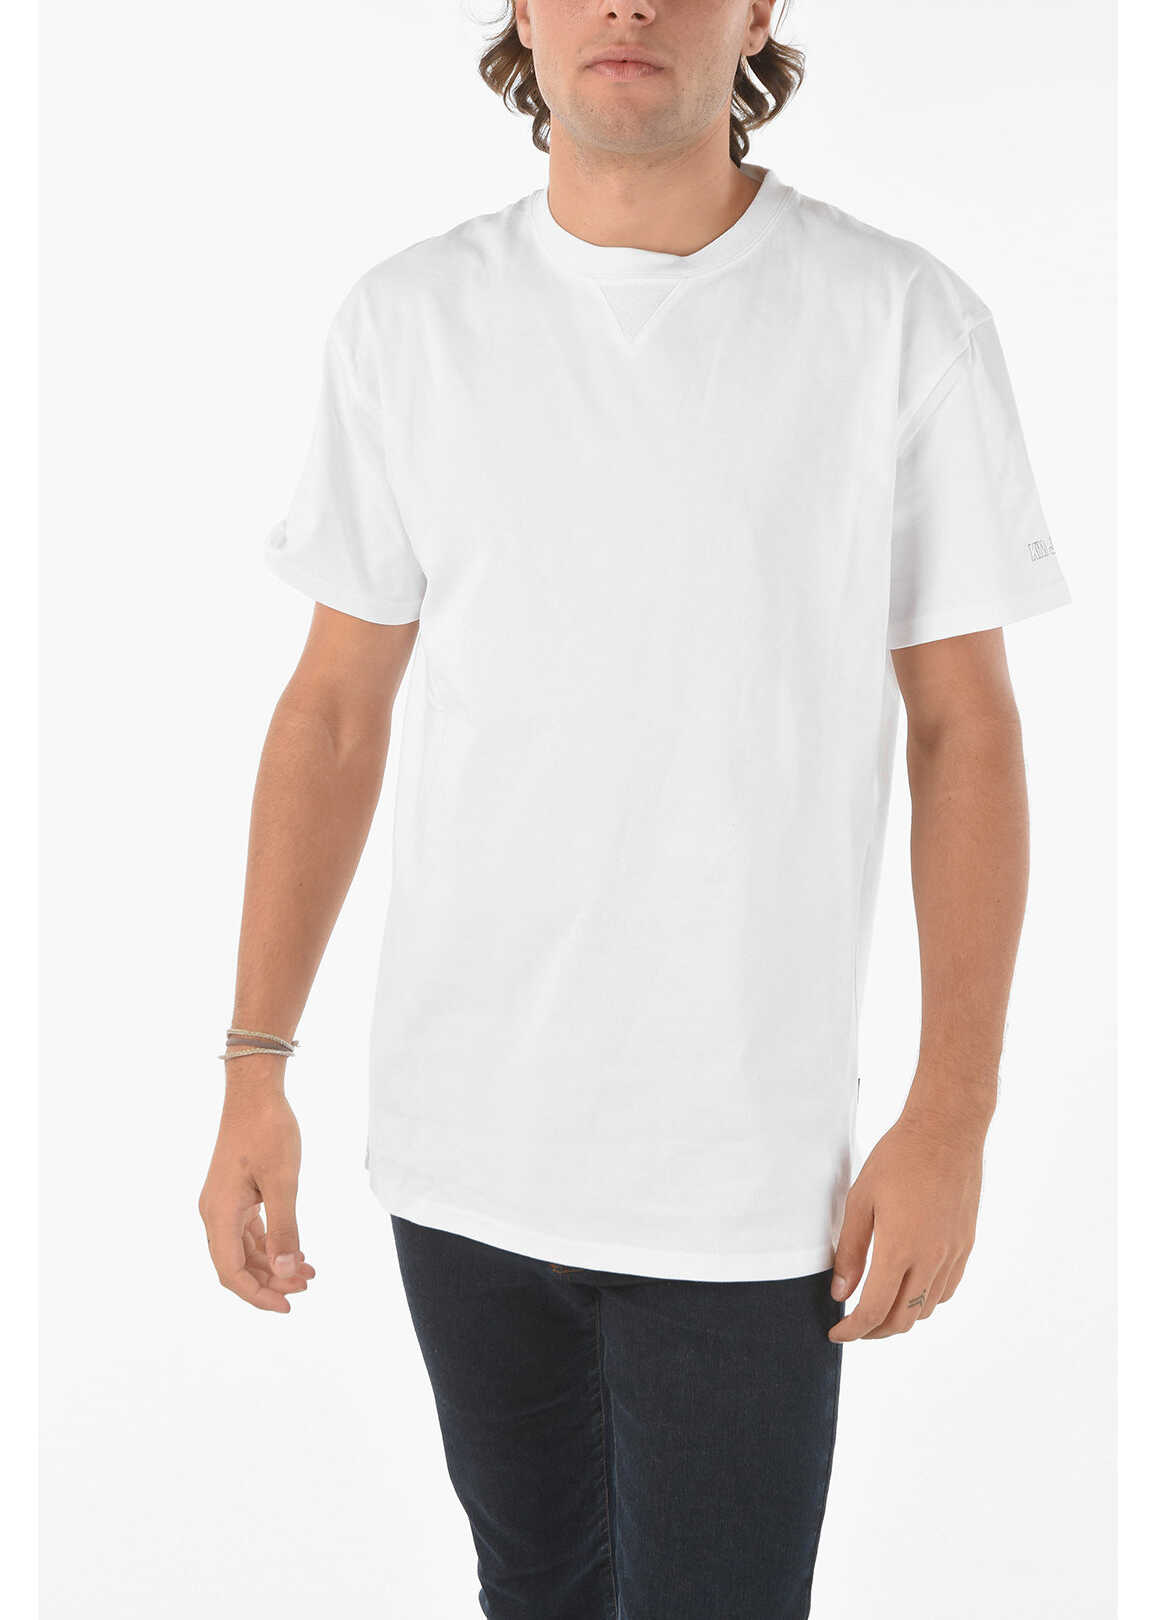 Converse Kim Jones Cotton Crew-Neck T-Shirt White